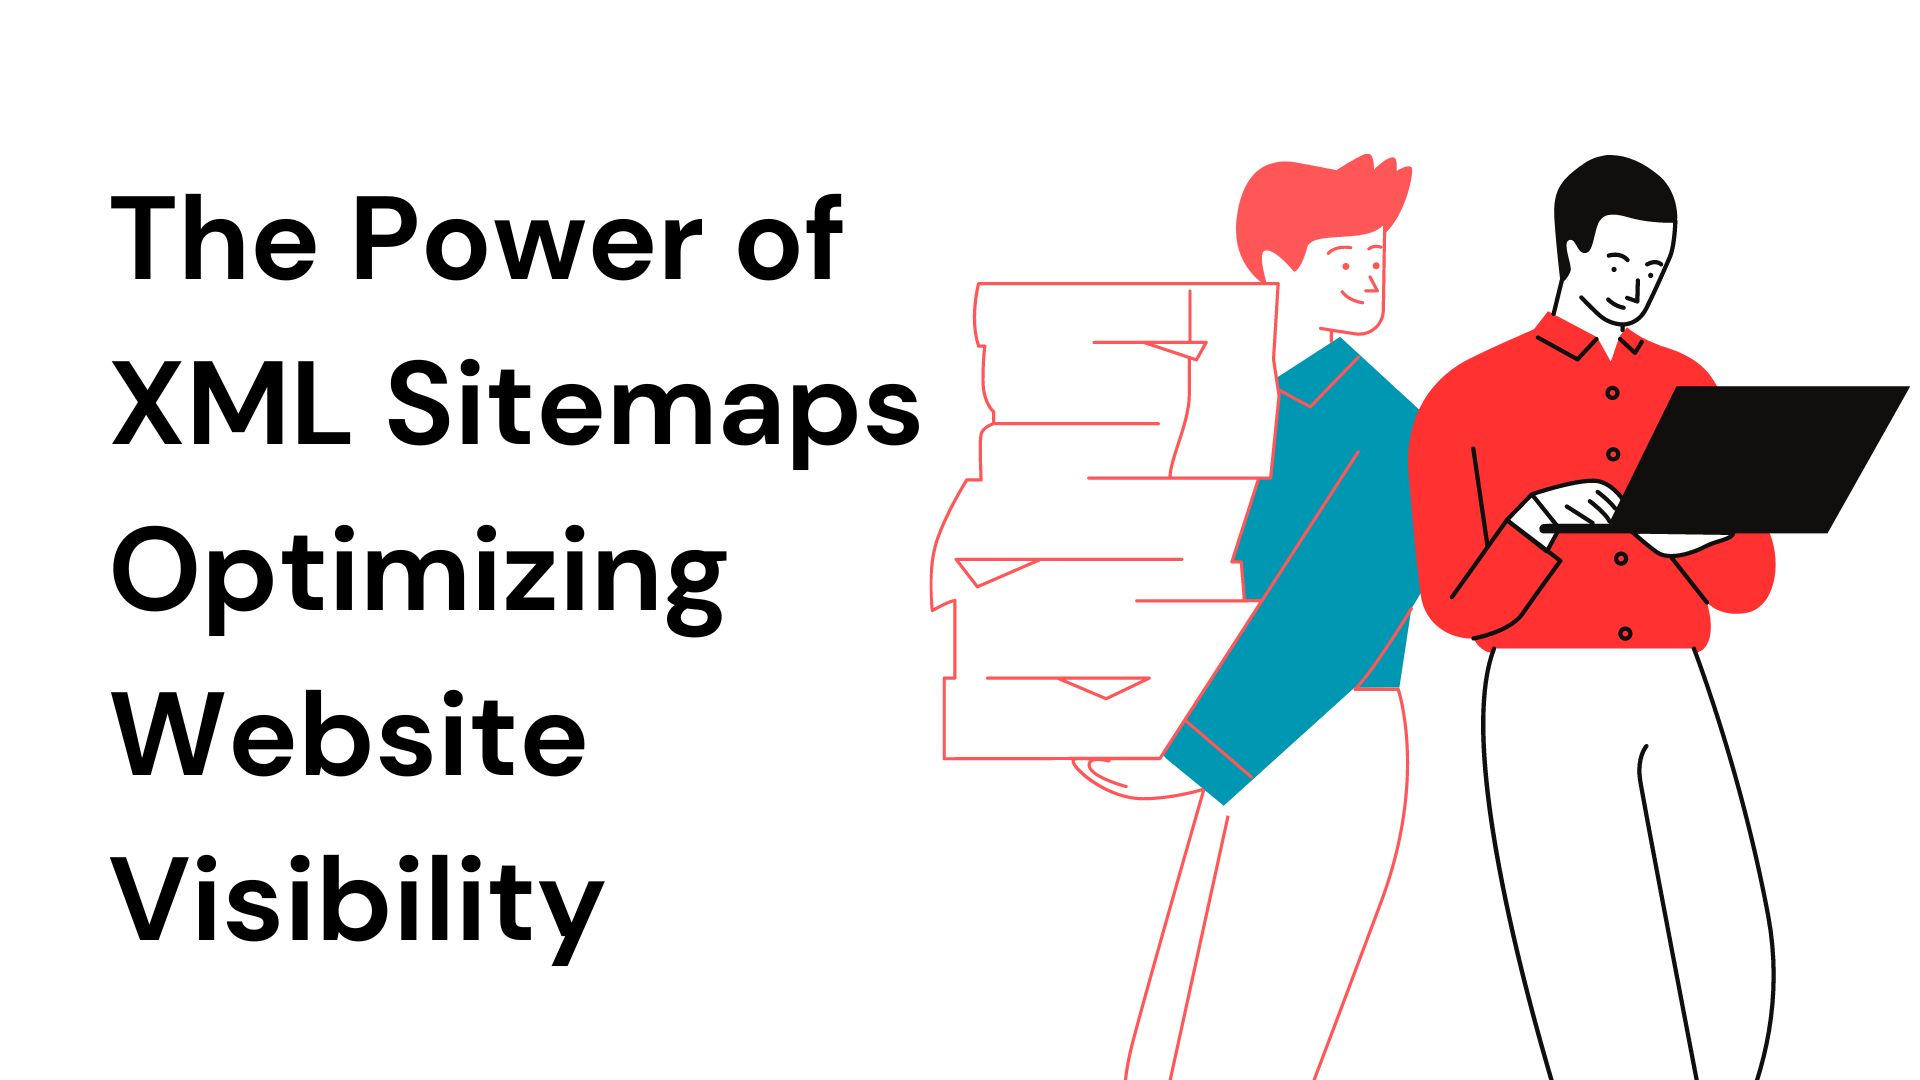 The Power of XML Sitemaps - Optimizing Website Visibility